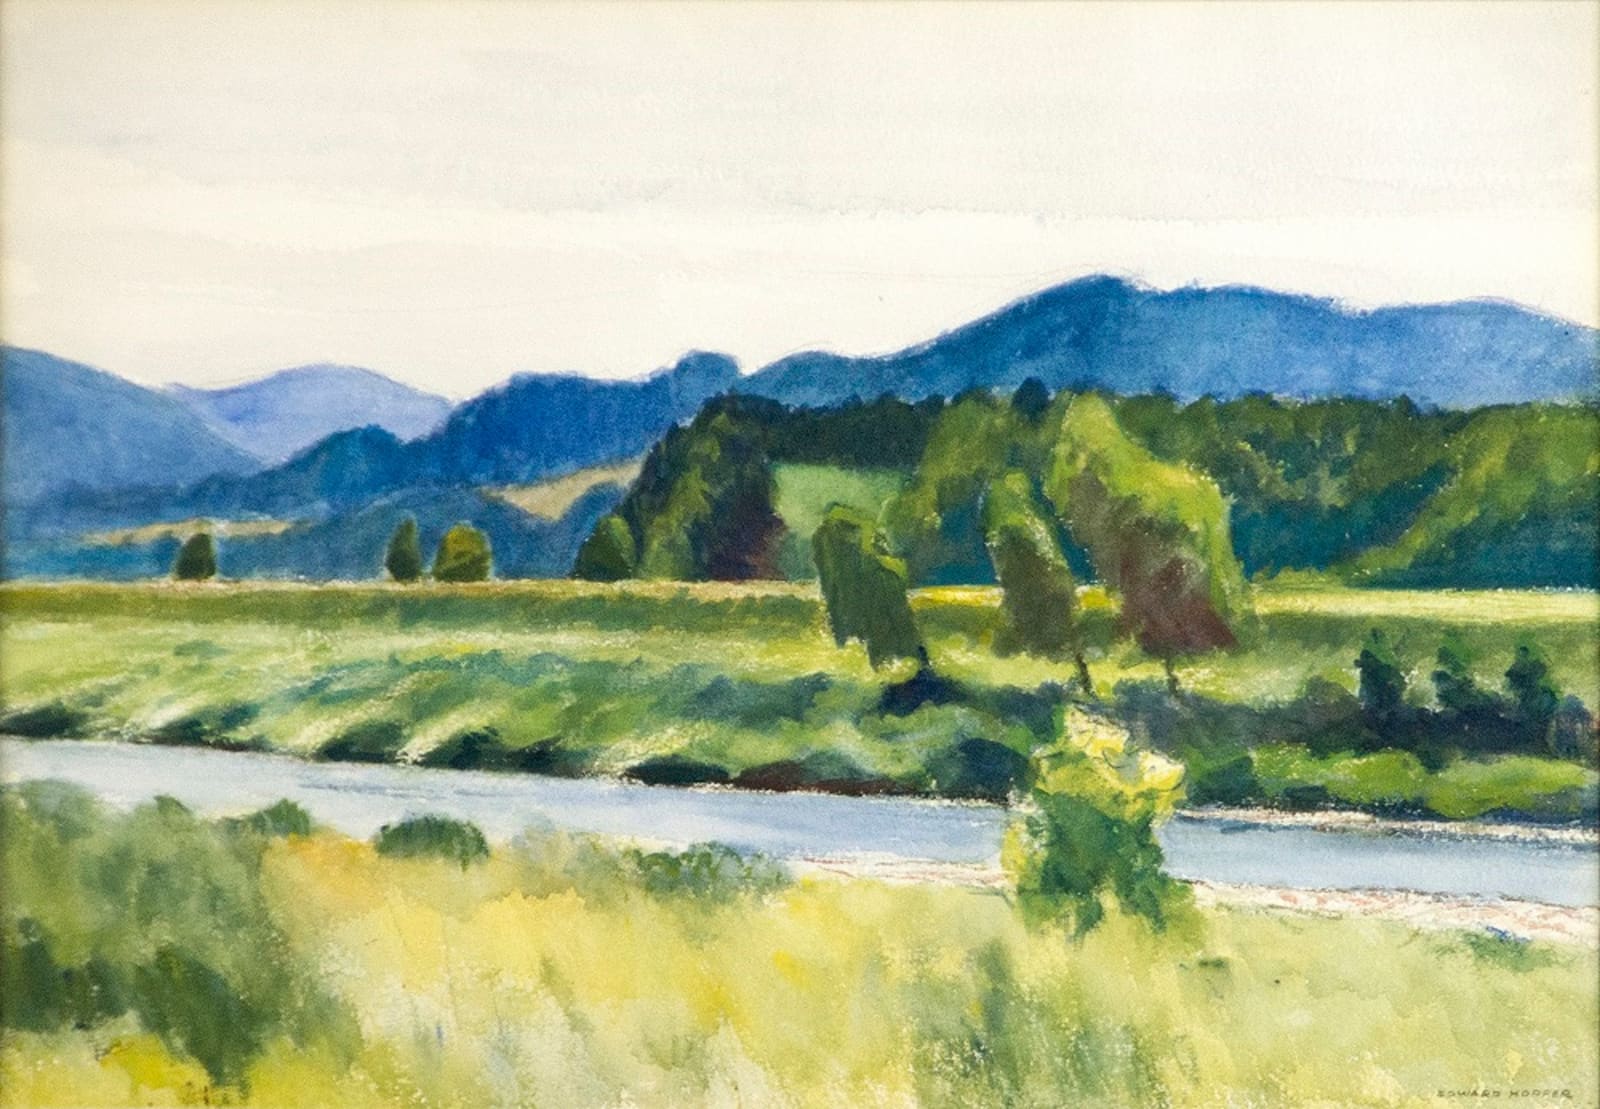 Edward Hopper, Rain on River, 1938